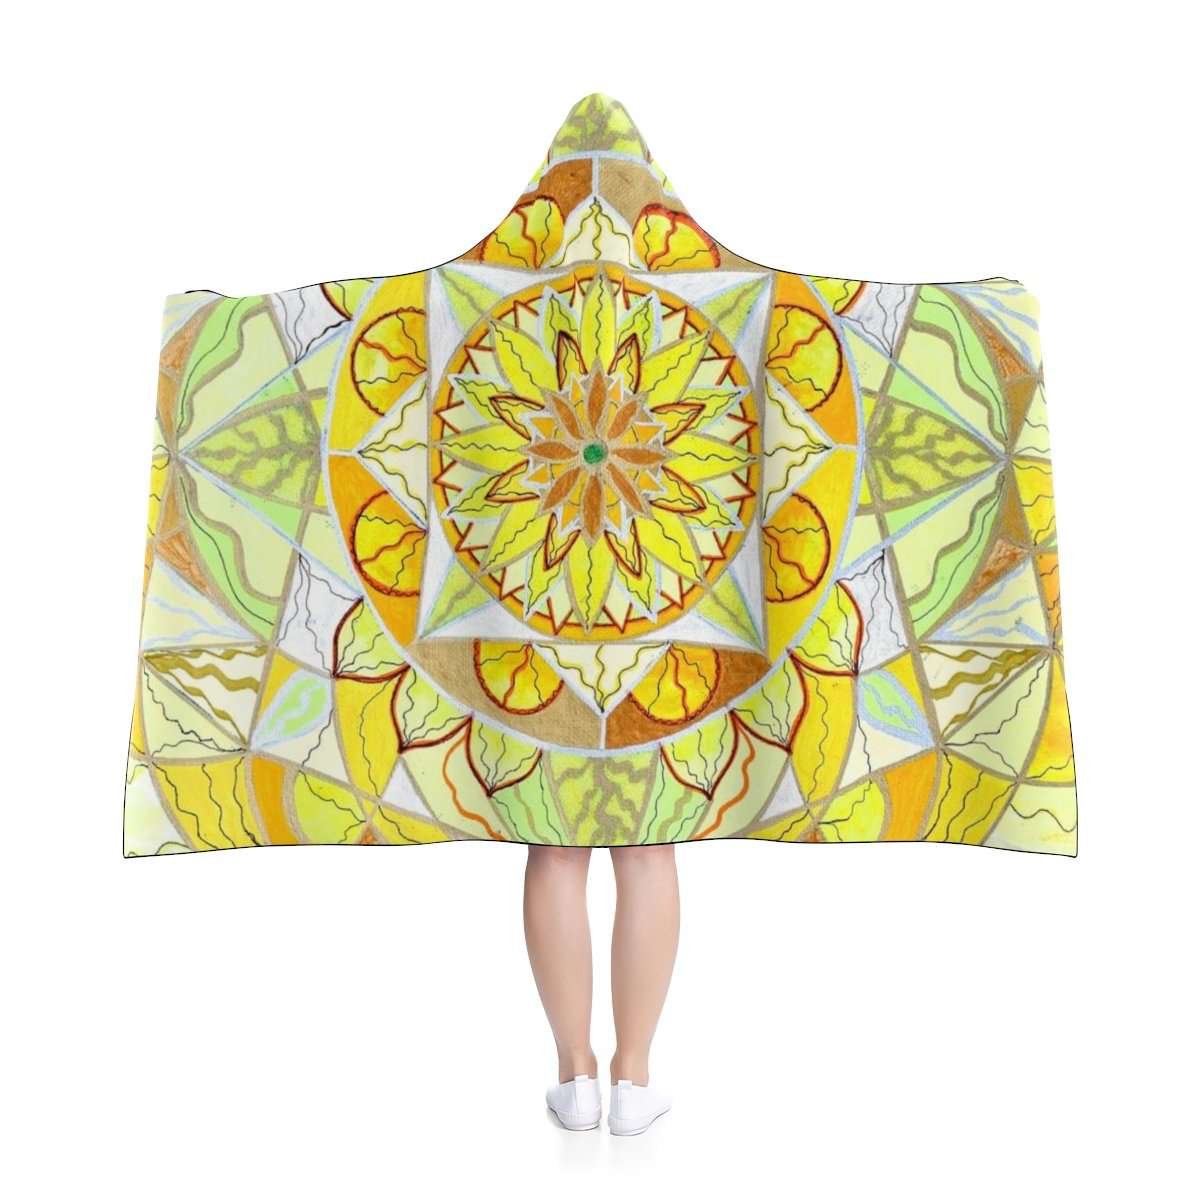 purchase-joy-hooded-blanket-online-hot-sale_0.jpg